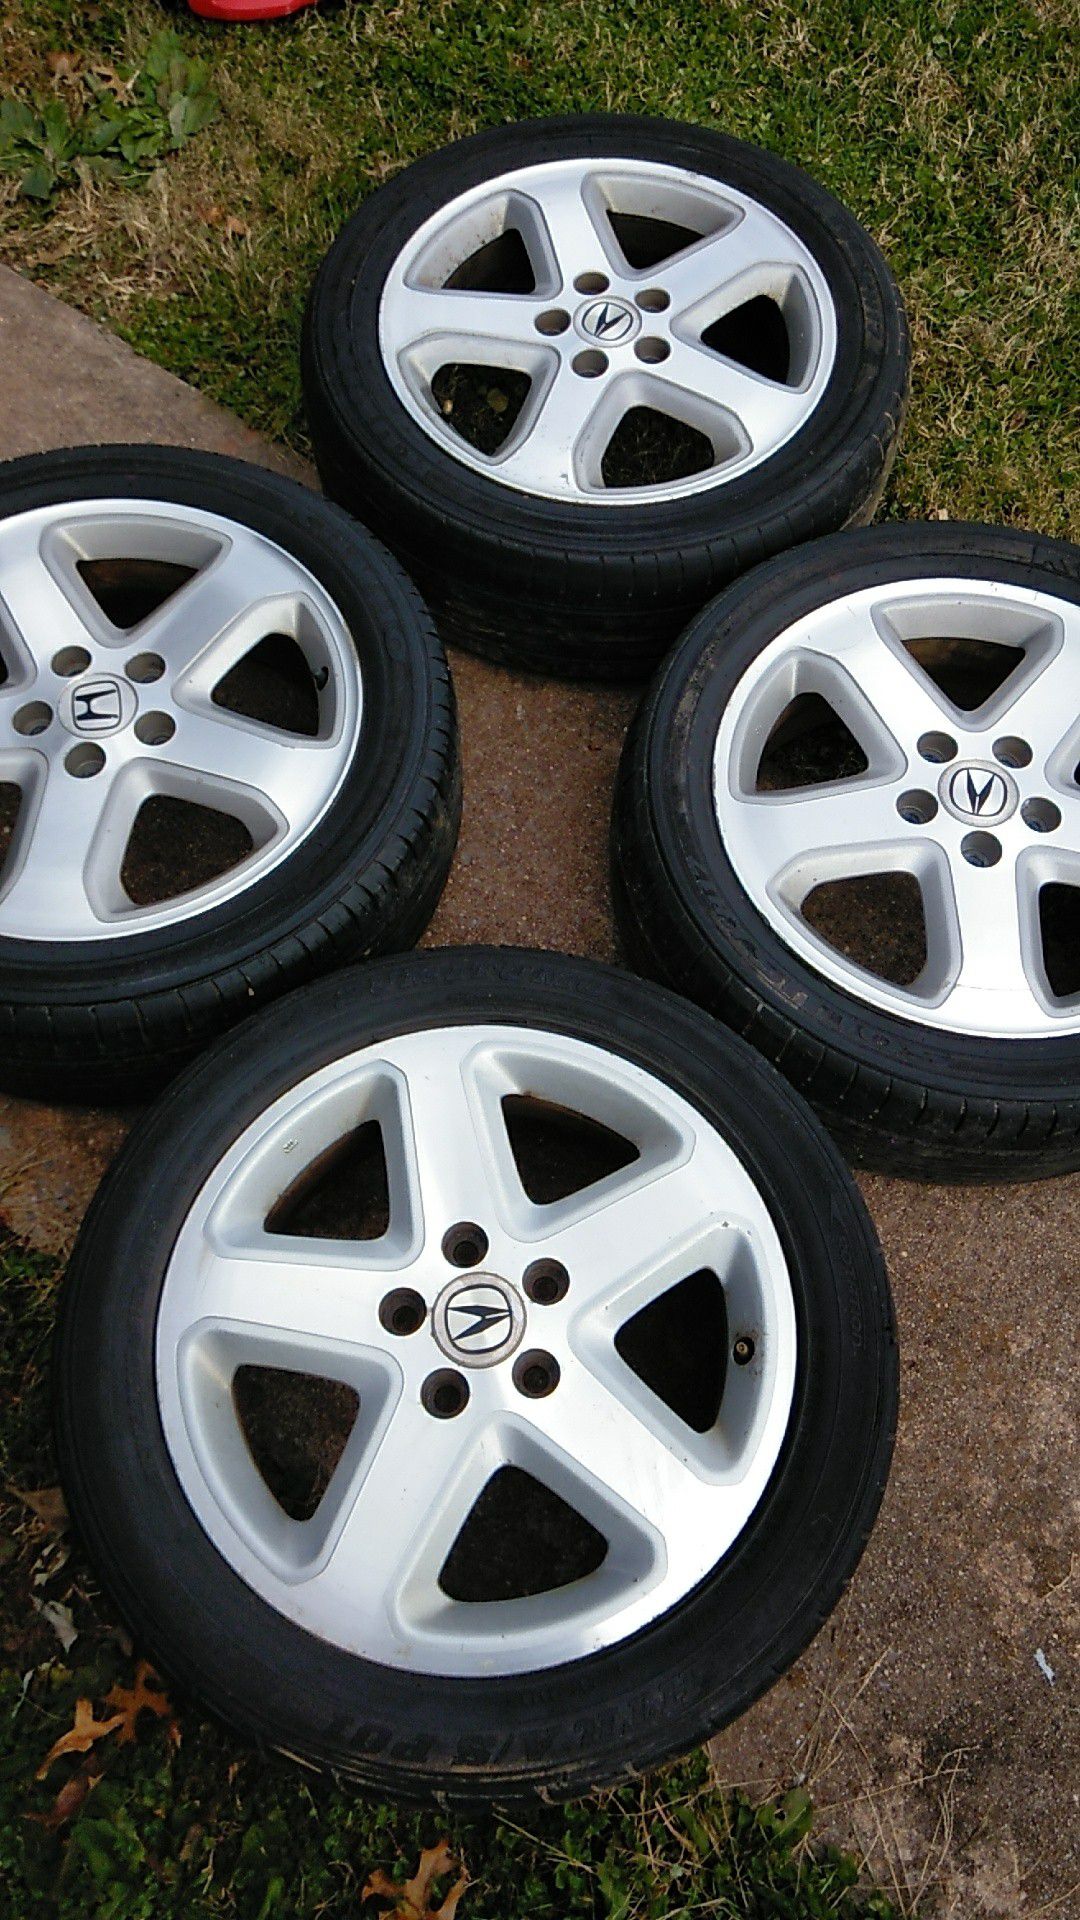 01 Acura TL Type-S 17" wheels